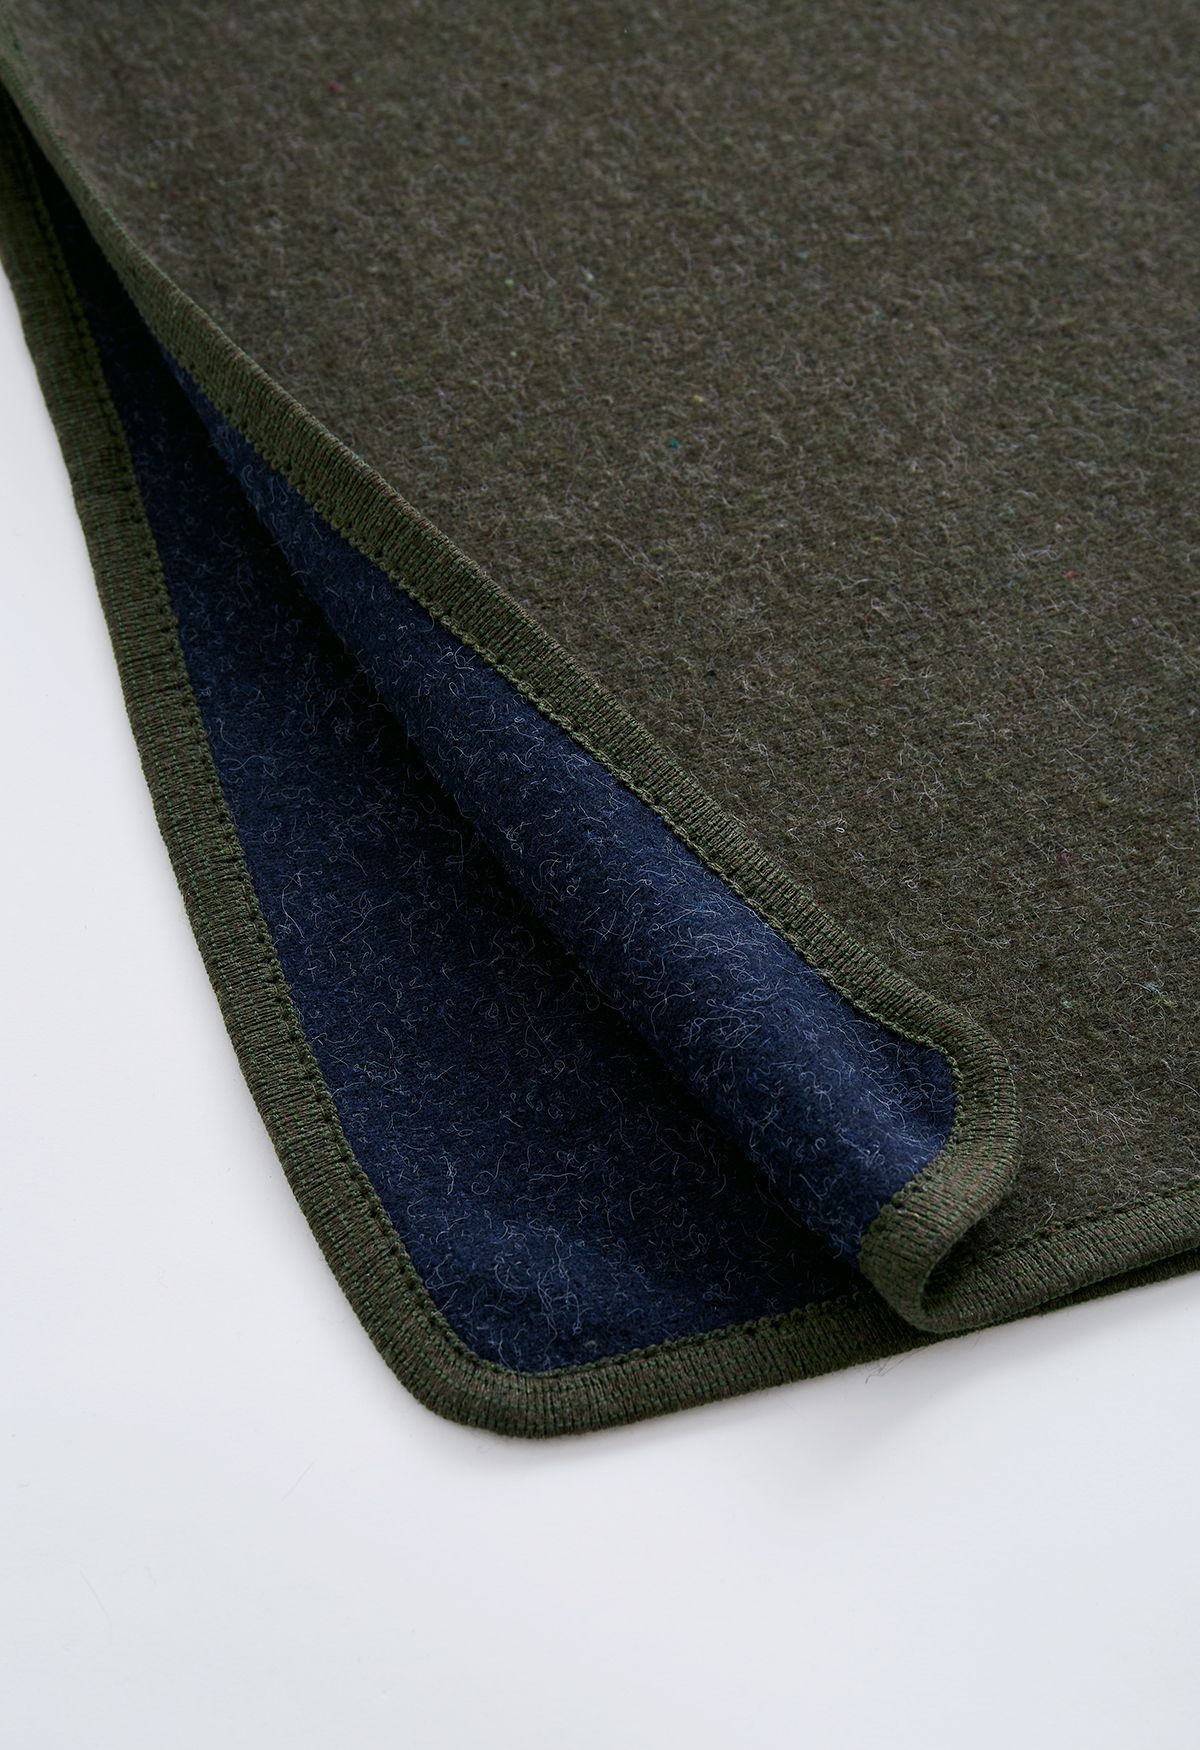 Poncho con capucha de pelo sintético en mezcla de lana en verde oscuro